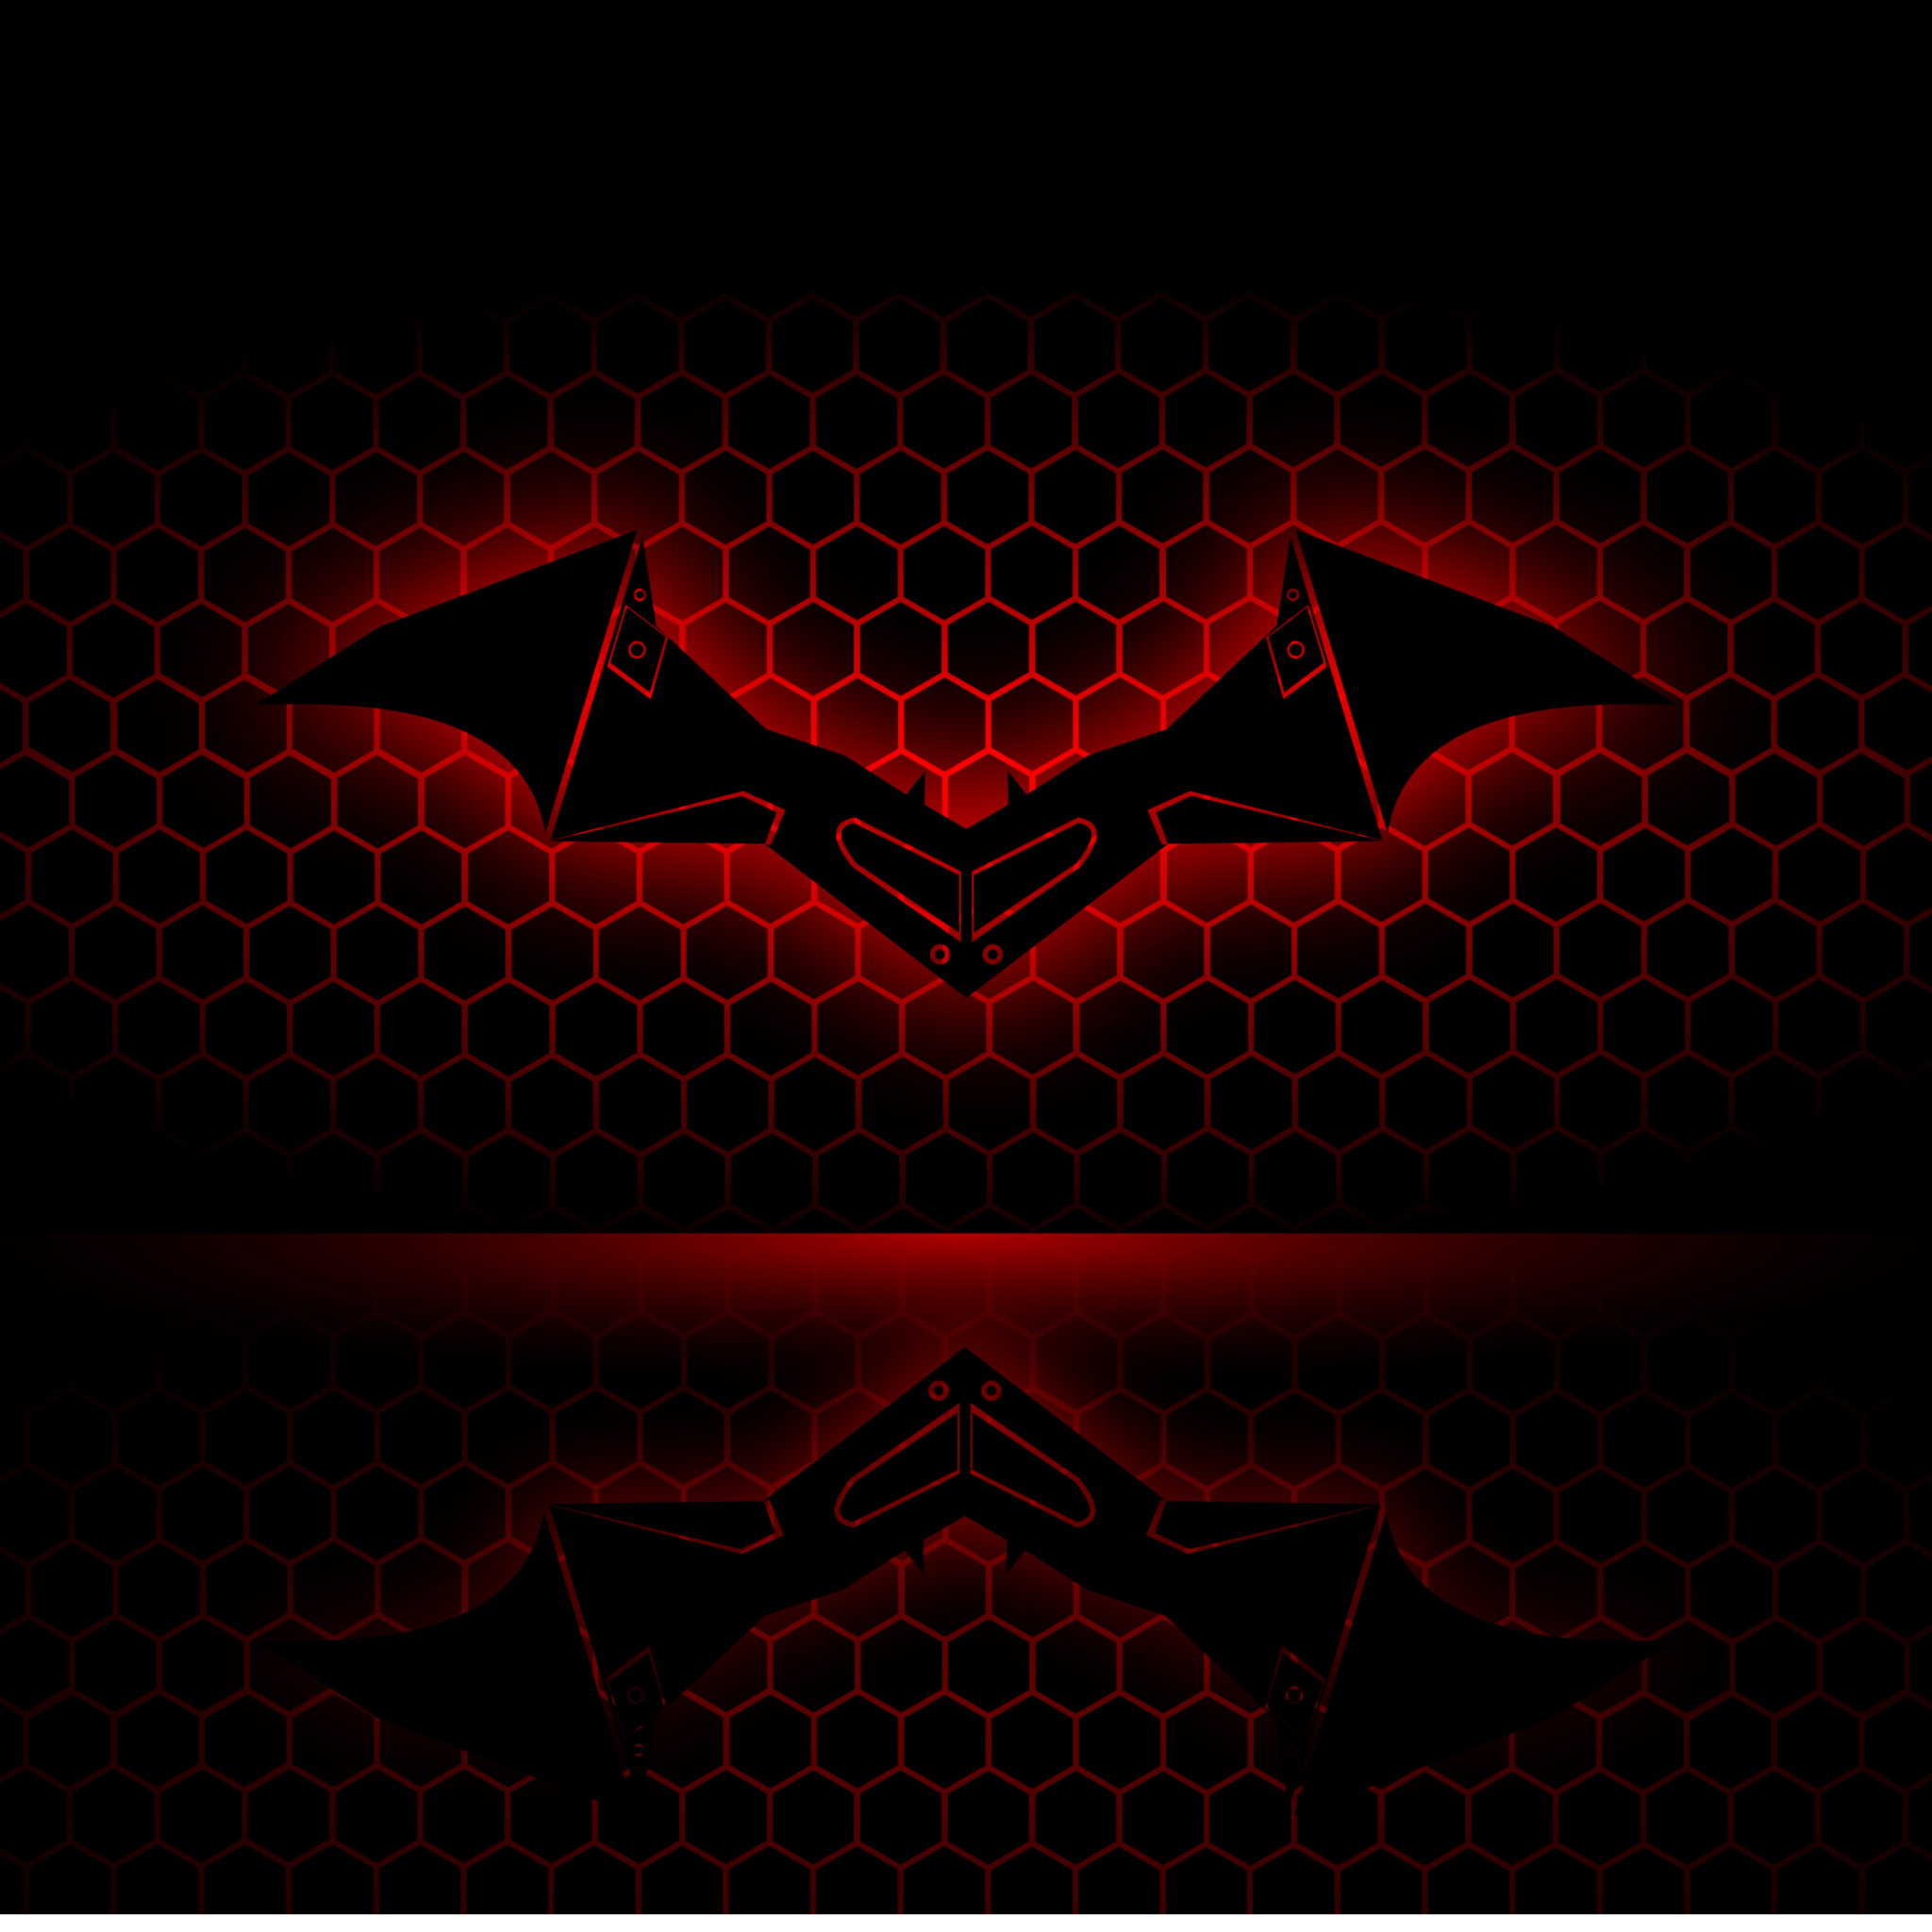 2048x2048 4K The Batman Logo Ipad Air Wallpaper, HD Superheroes 4K  Wallpapers, Images, Photos and Background - Wallpapers Den